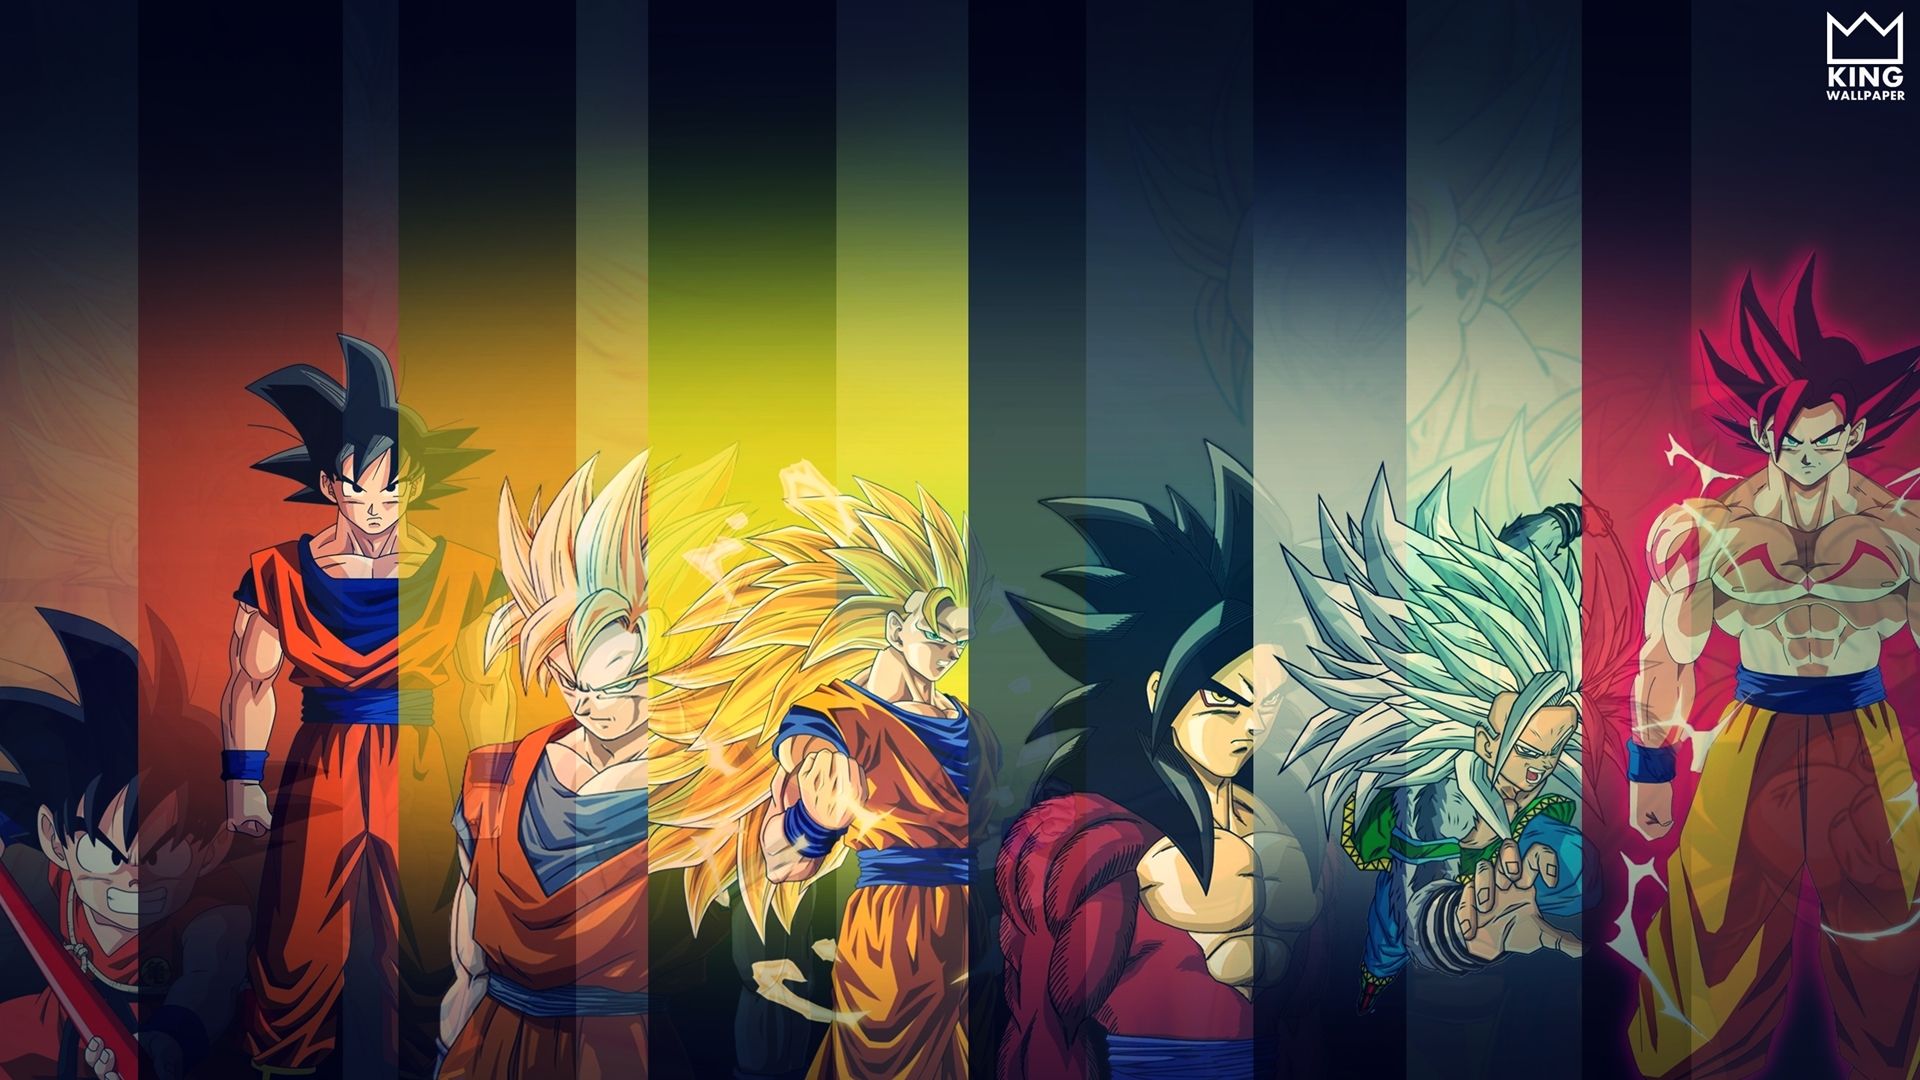 40 Best Goku Wallpaper hd for PC Dragon Ball Z